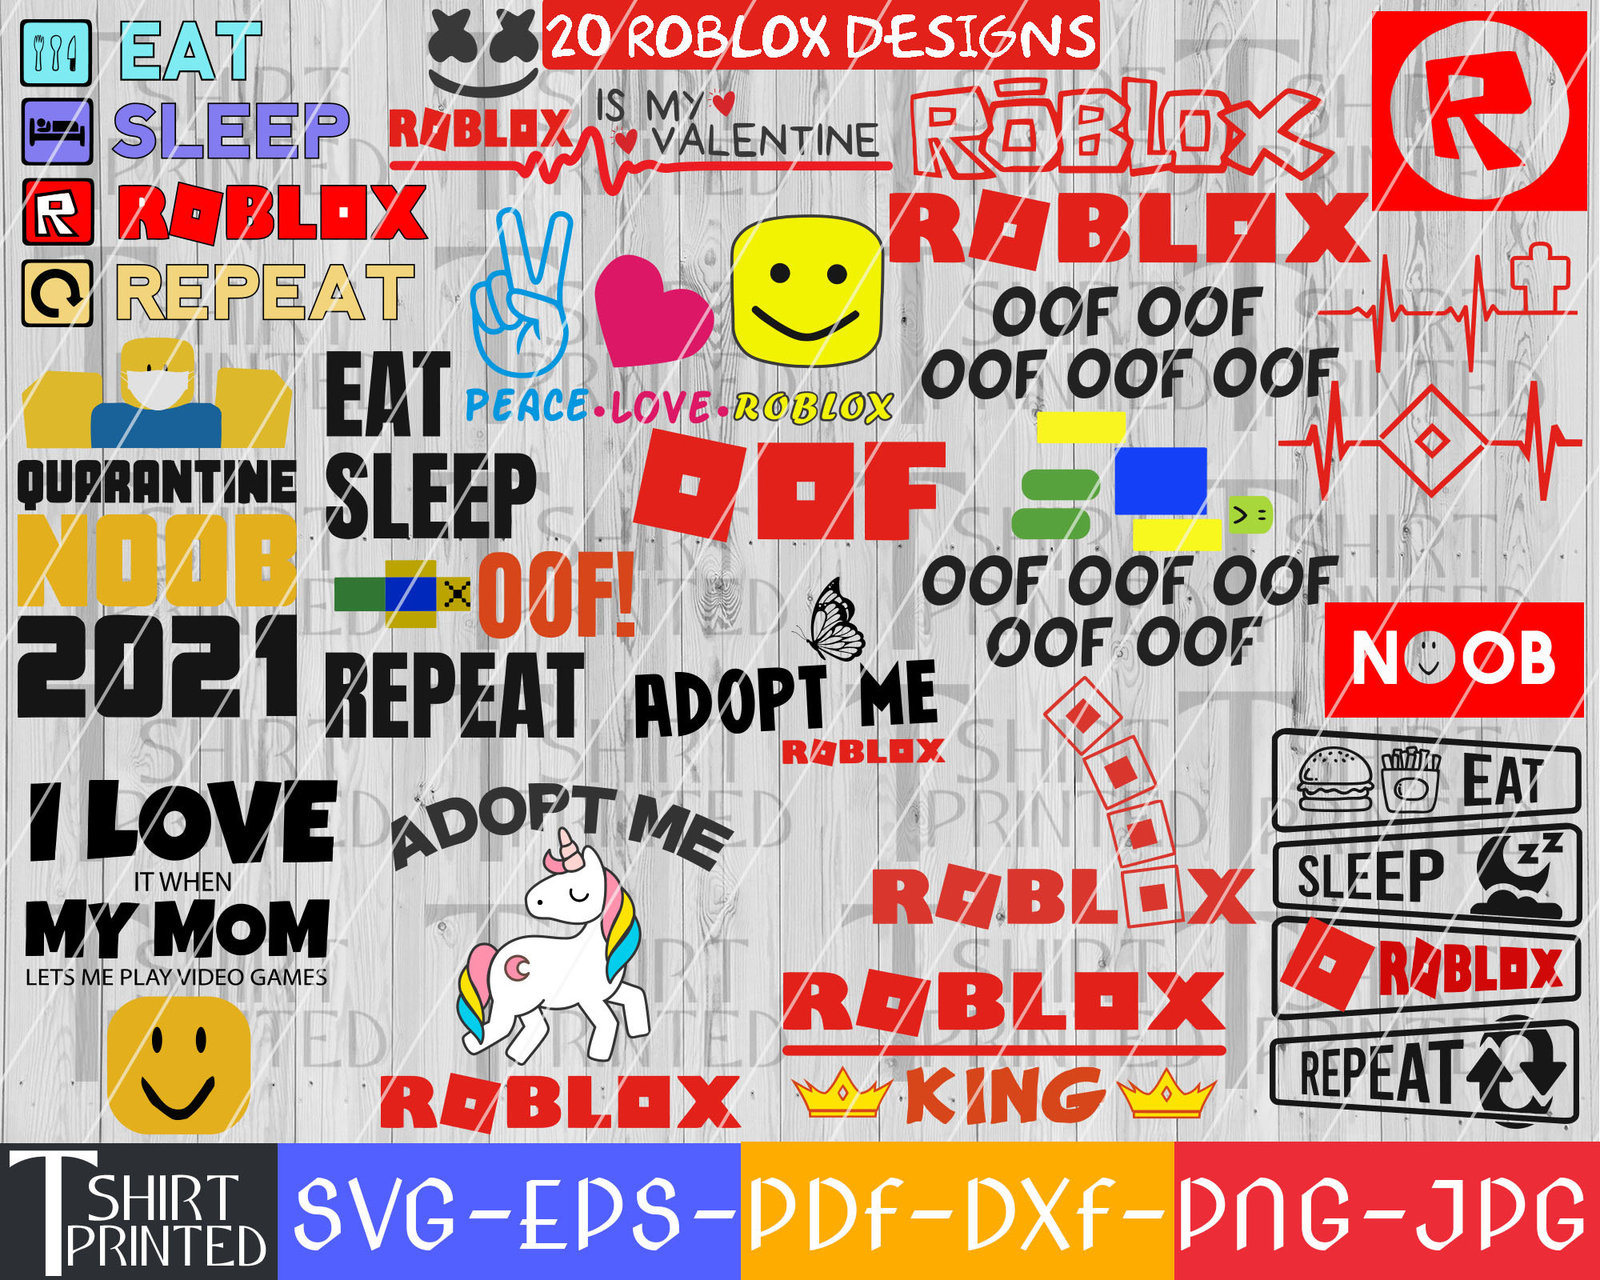 Download Roblox Svg Bundle, Roblox Game Svg, Roblox Character, Eat Sleep Roblox Repeat. - Digital Art